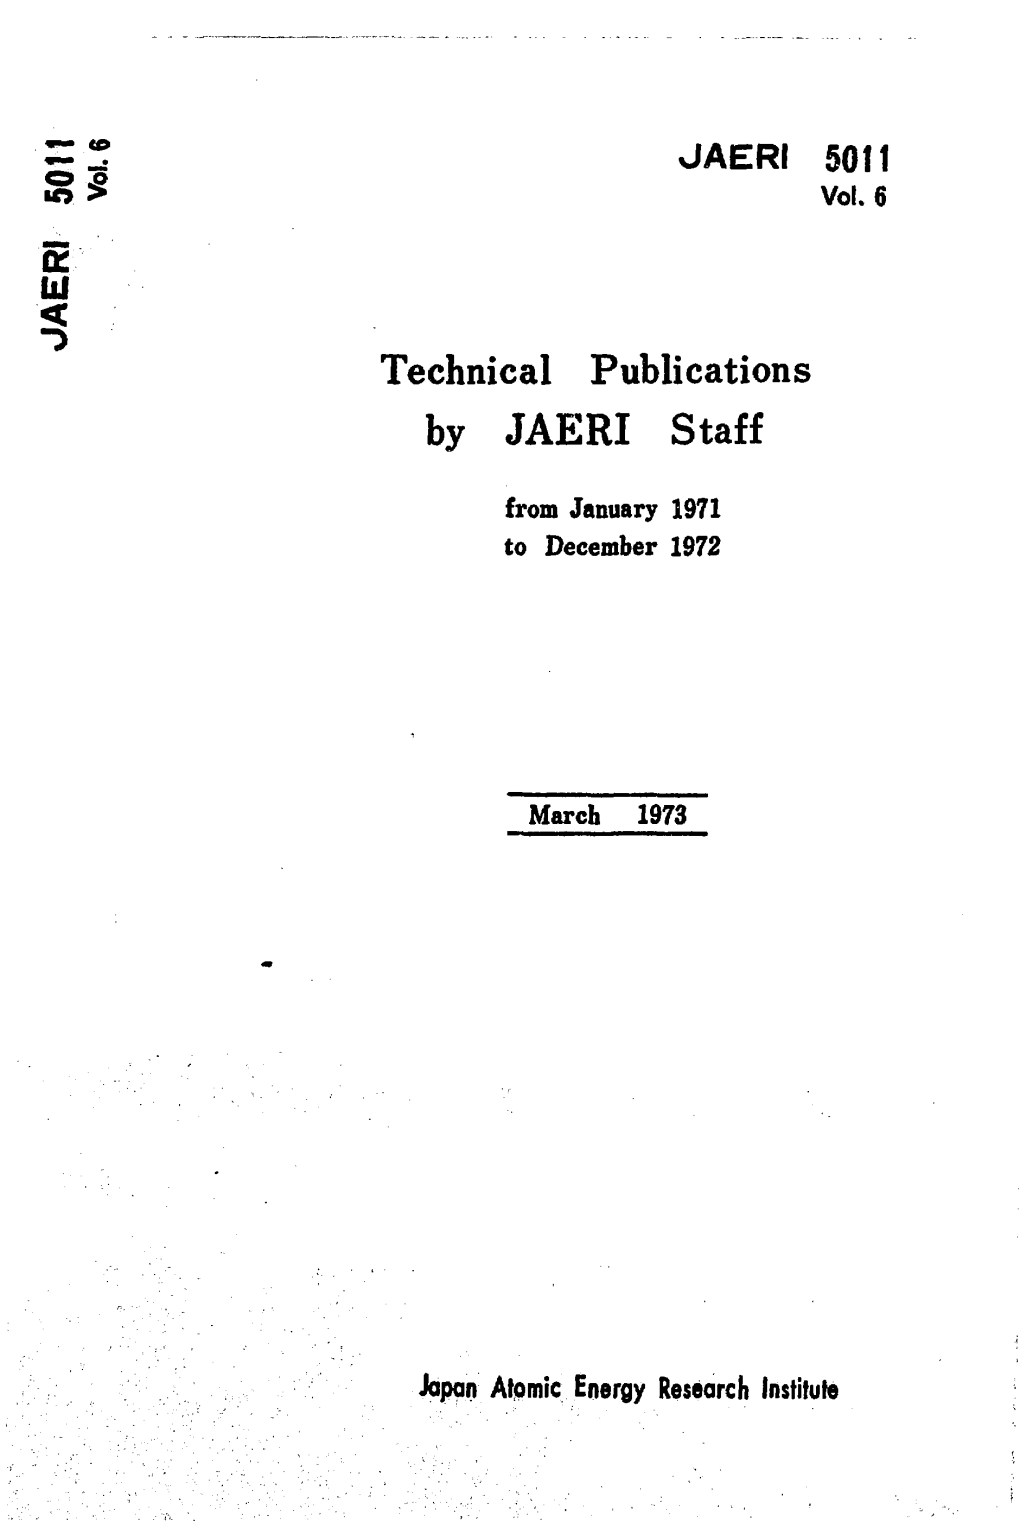 Technical Publications by JAERI Staff